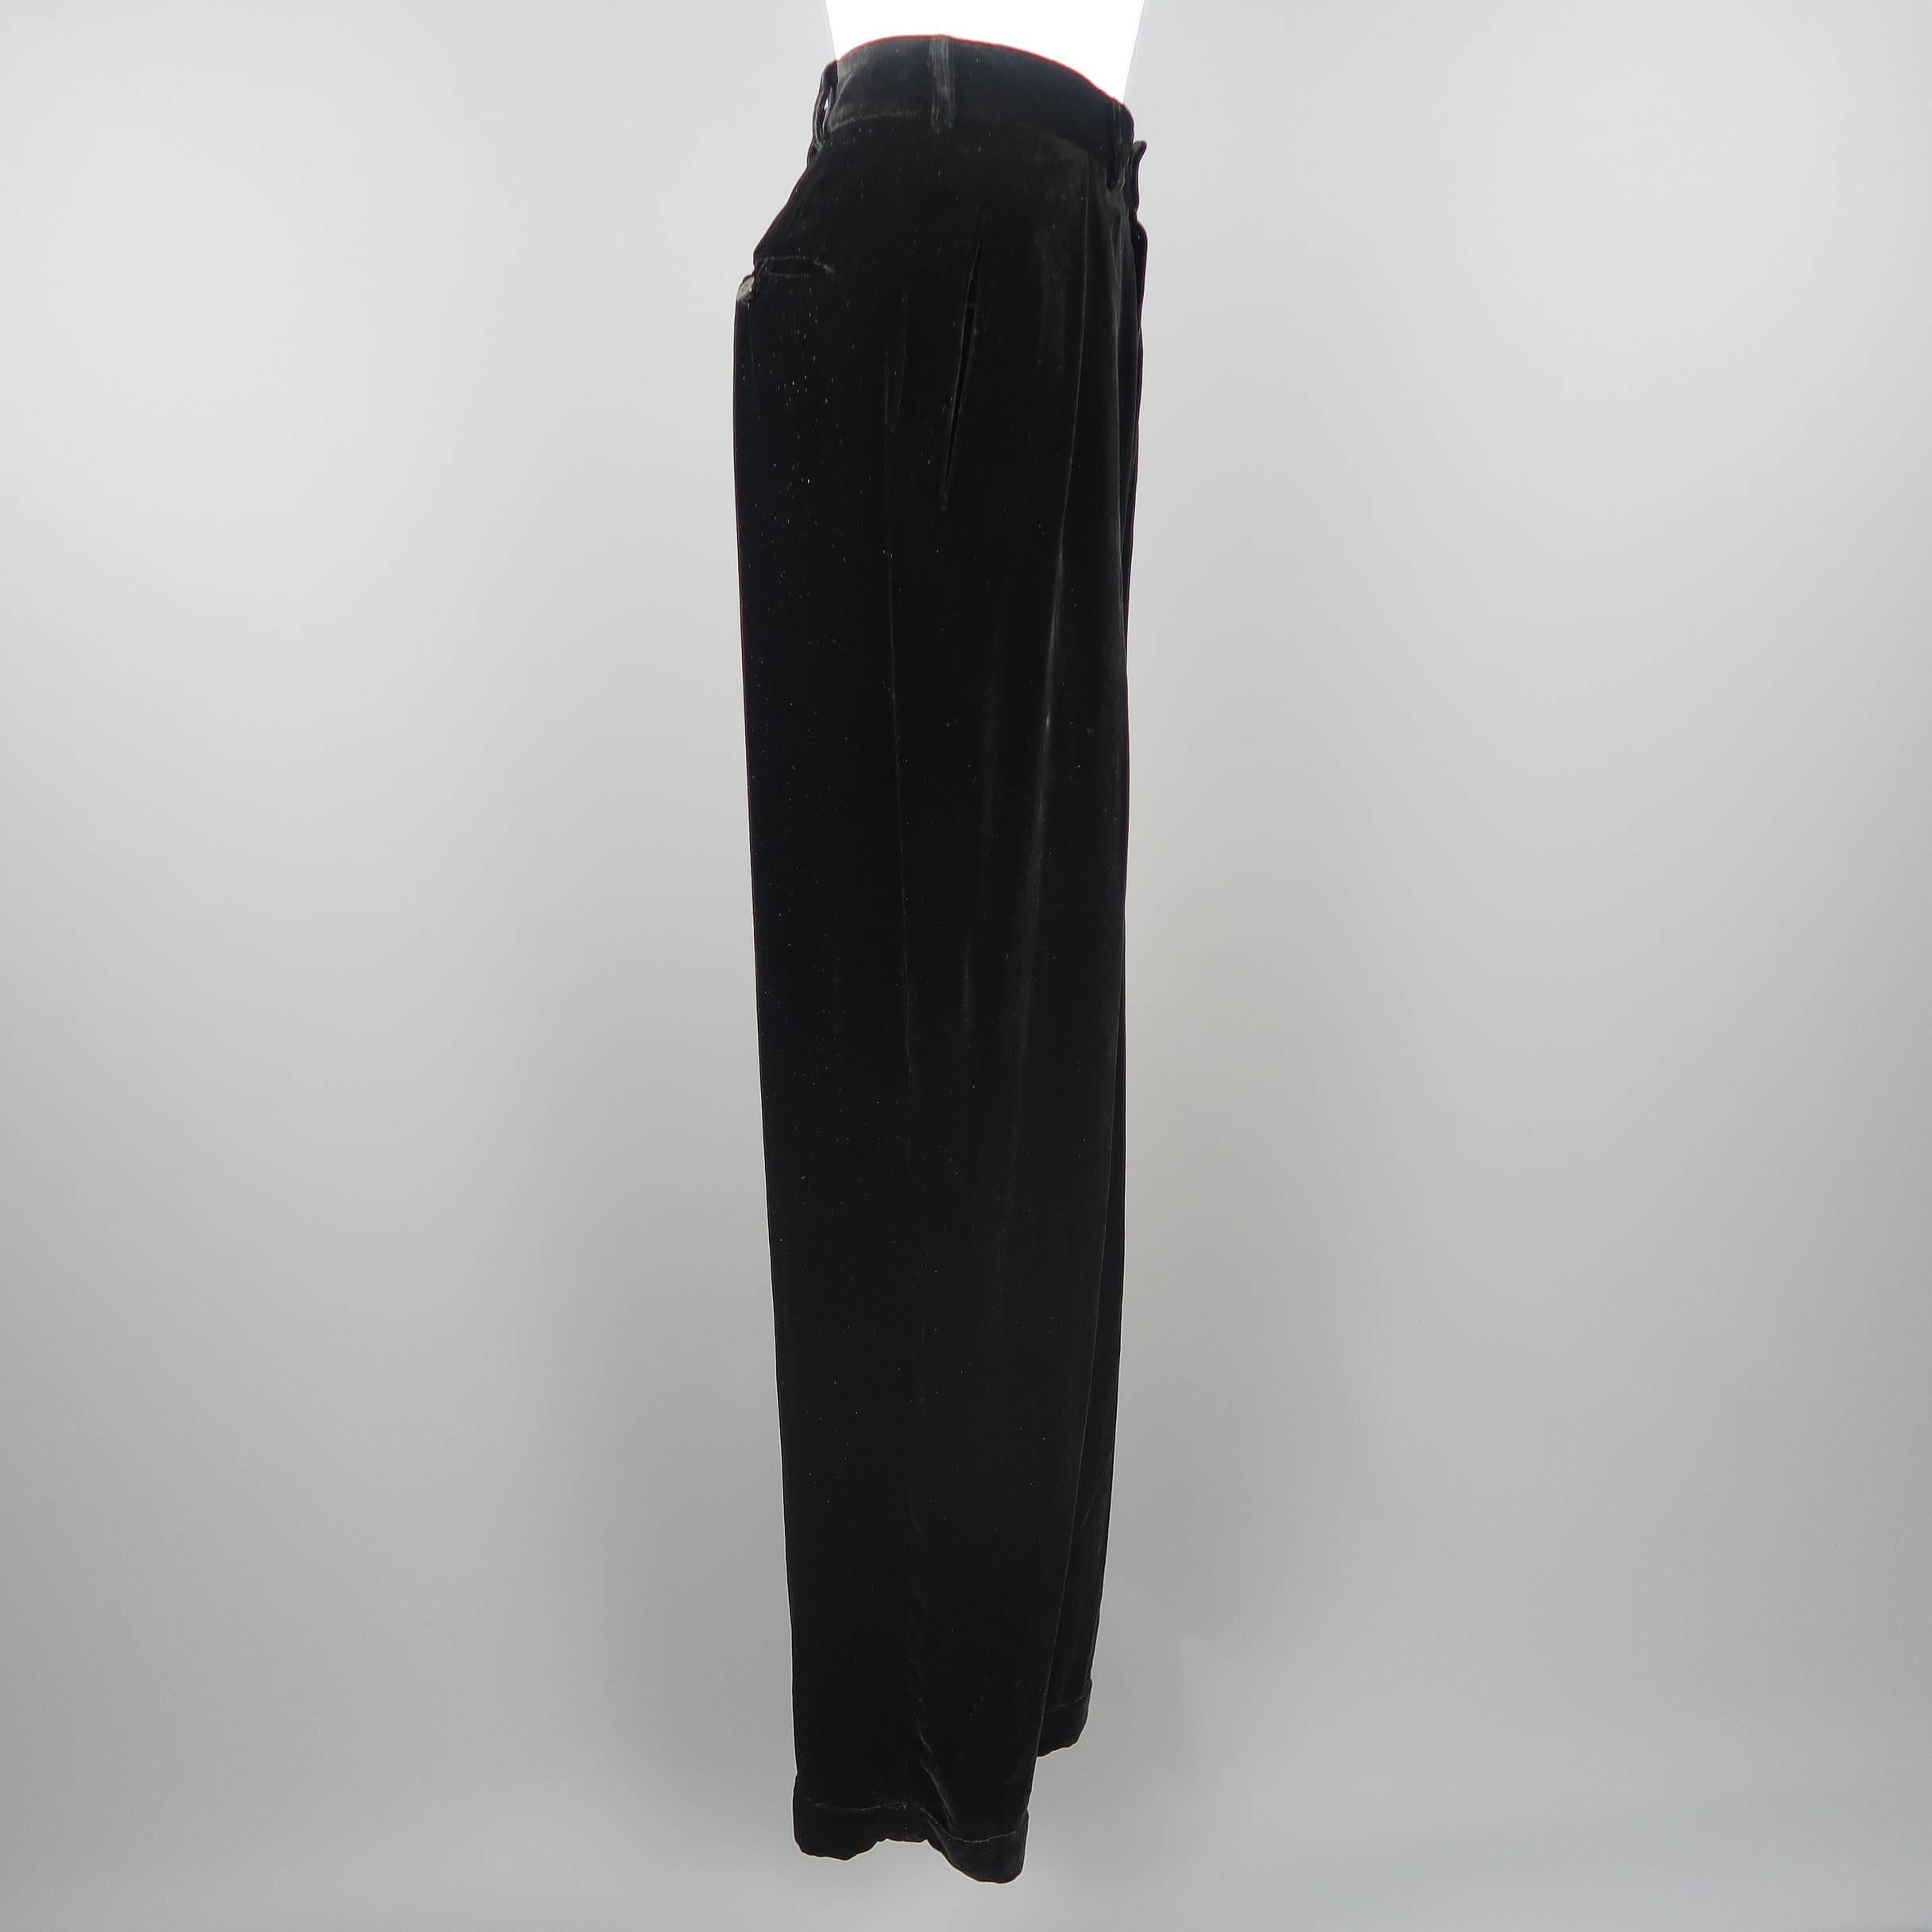  DONNA KARAN Size 8 Black Velvet High Rise Pleated Dress Pants 1